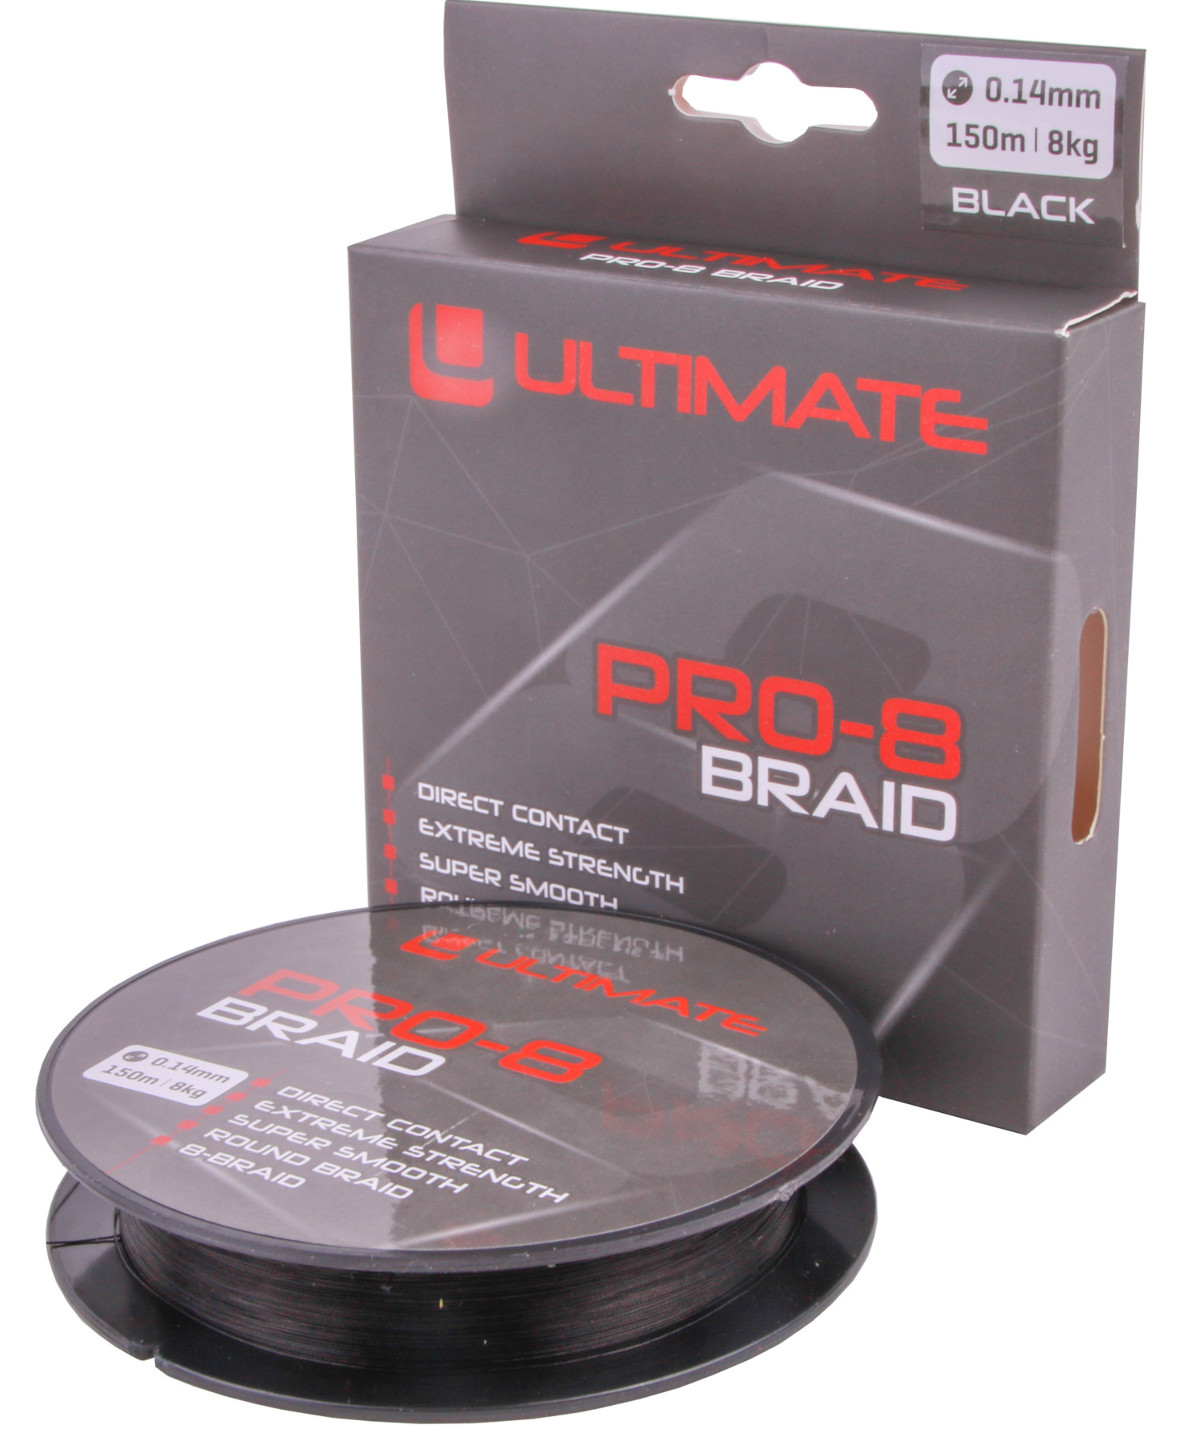 Ultimate Pro-8 Braid (150m)